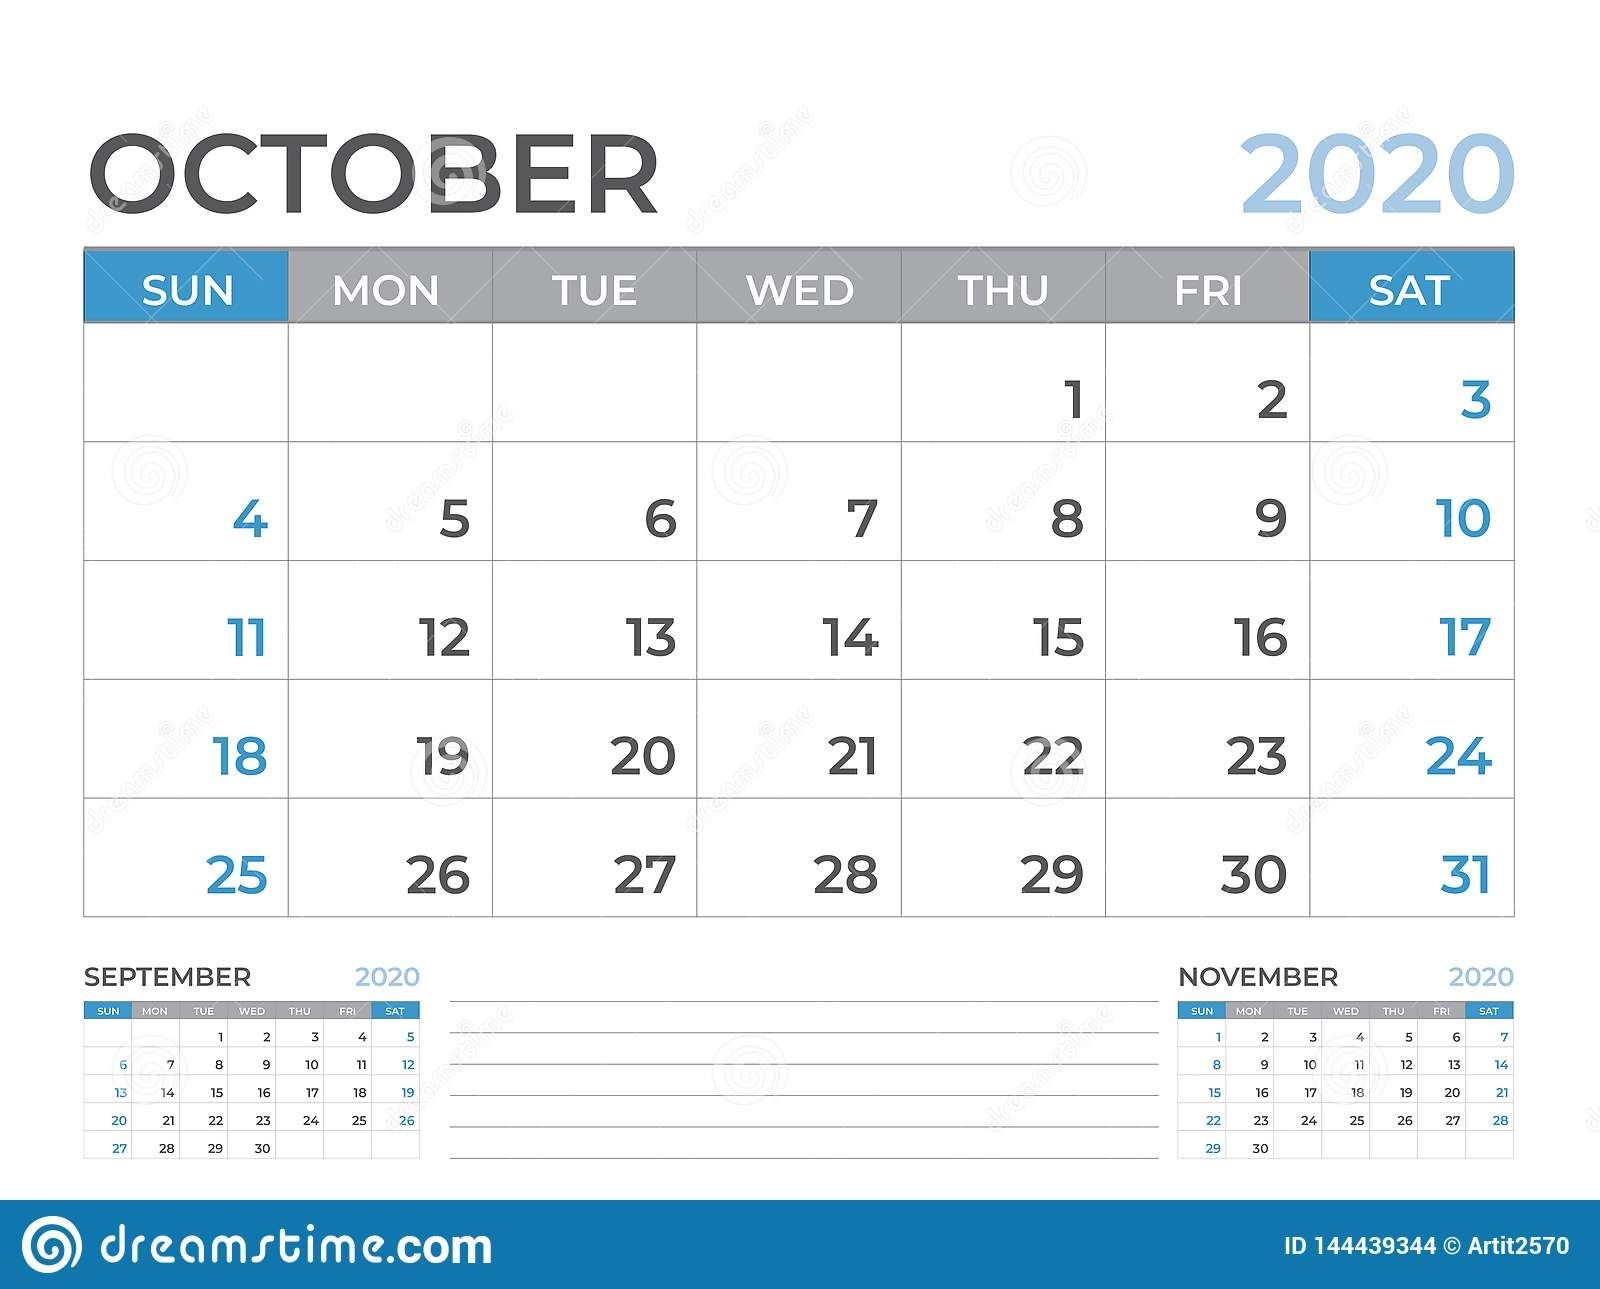 october 2020 calendar template, desk calendar layout size 8